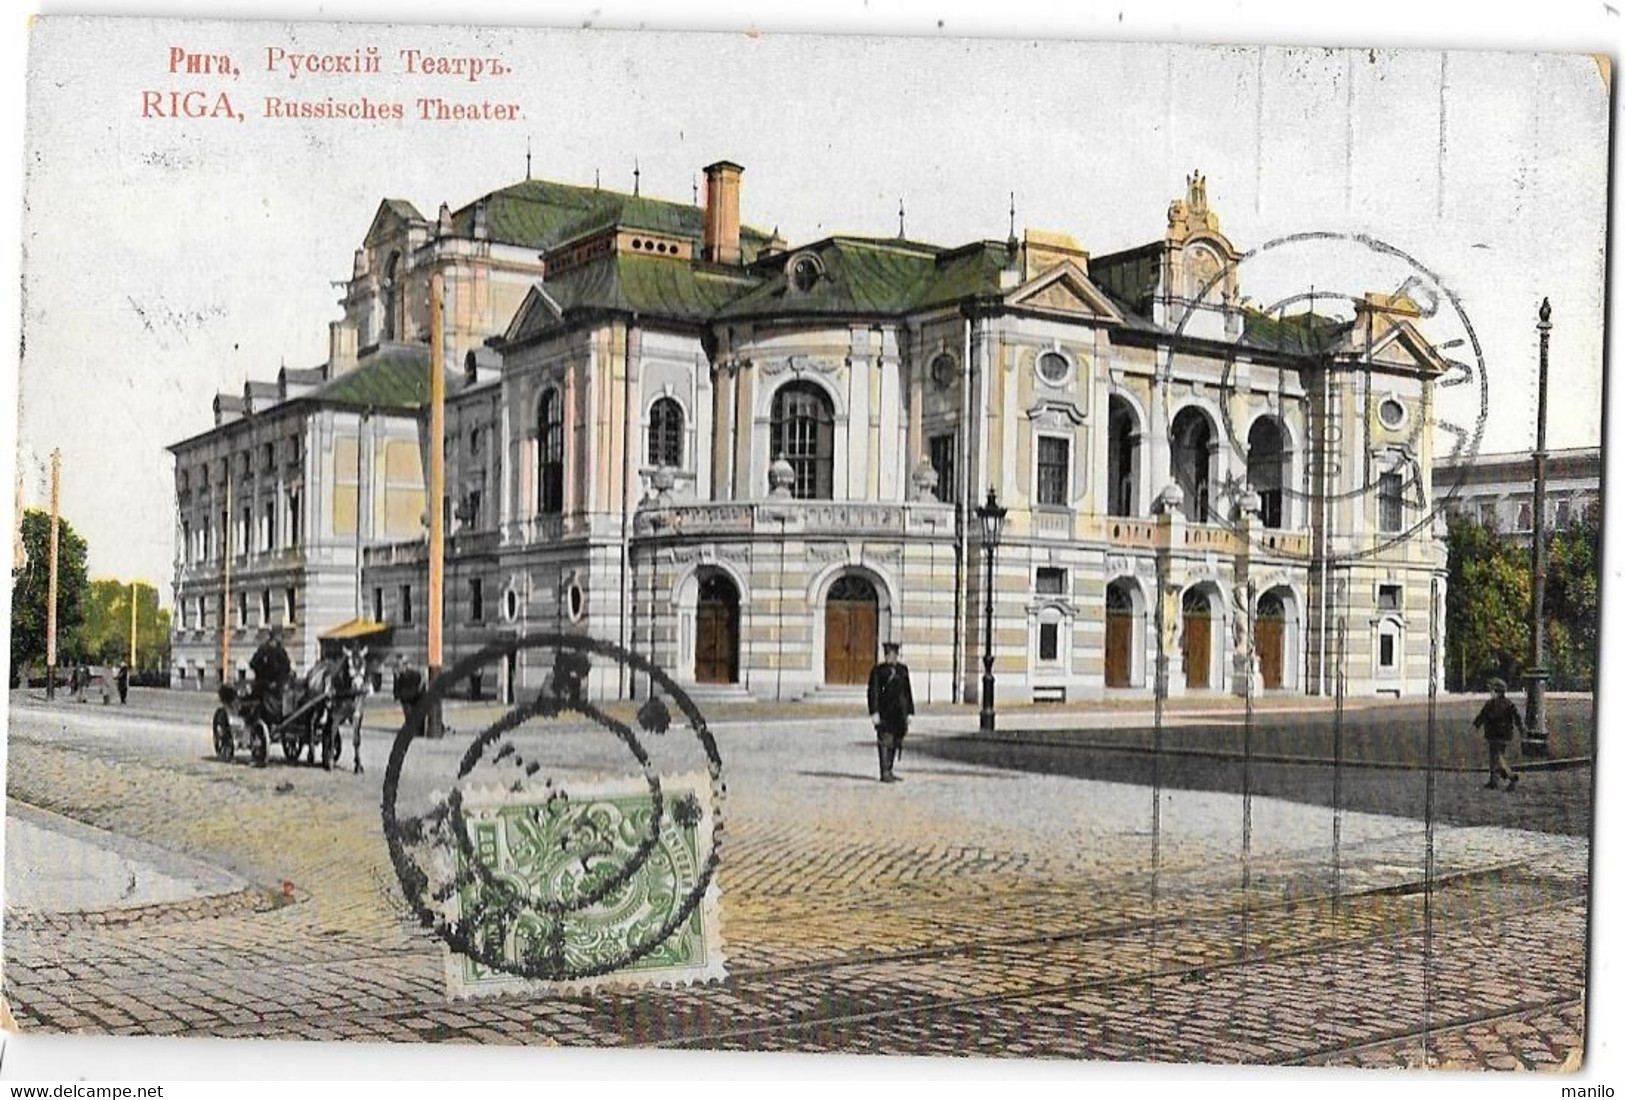 Lettonie - RIGA  -  Russisches Theater  - Théatre Russe  -  1910   - Attelage - Lettonie